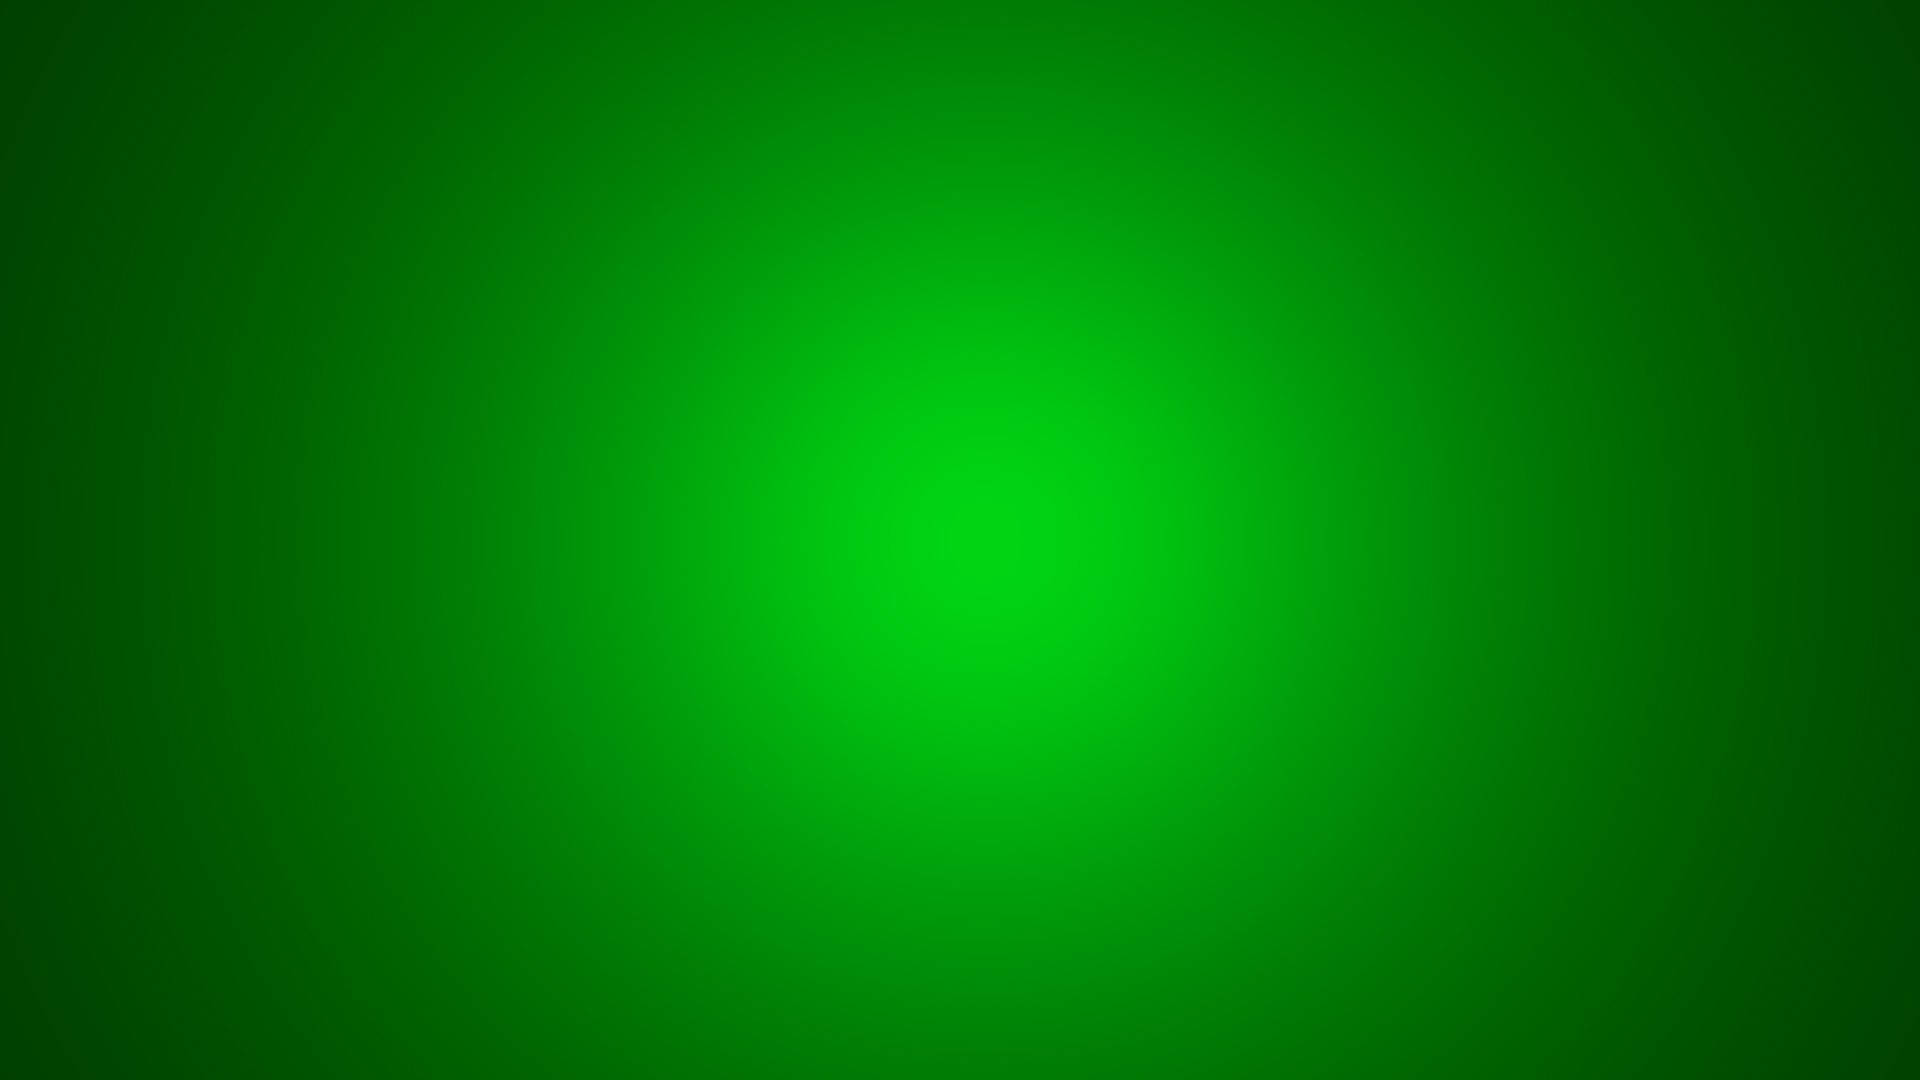 Free Plain Green Wallpaper Downloads, [100+] Plain Green Wallpapers for  FREE 